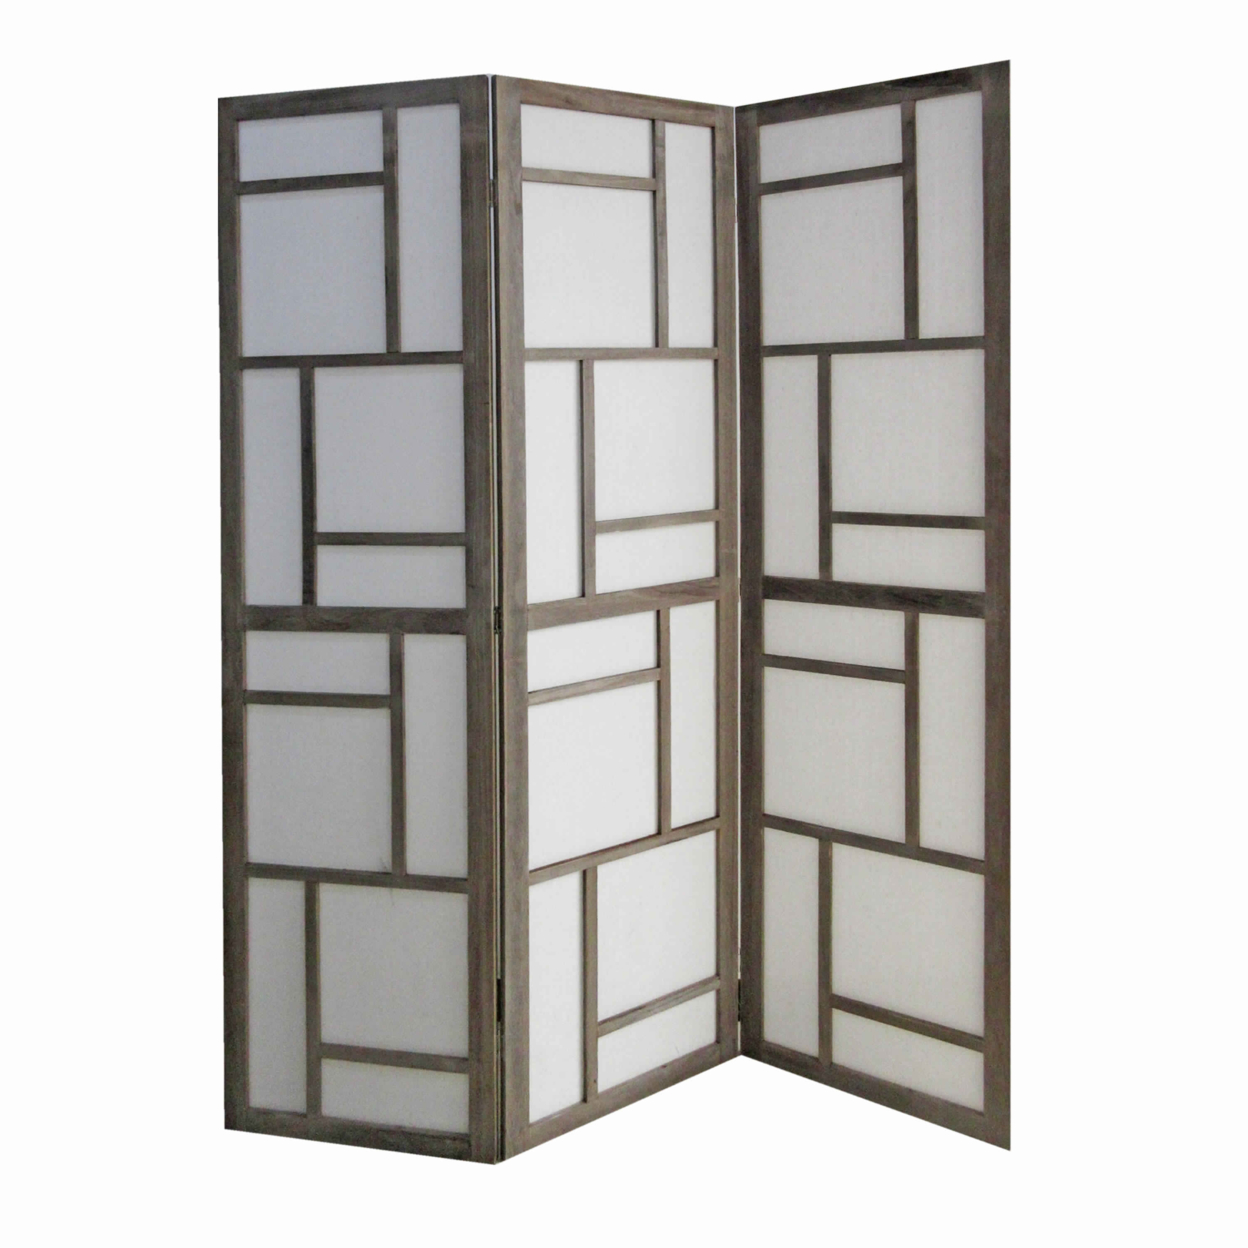 Contemporary 3 Panel Wooden Screen With Geometrical Designs, Gray- Saltoro Sherpi